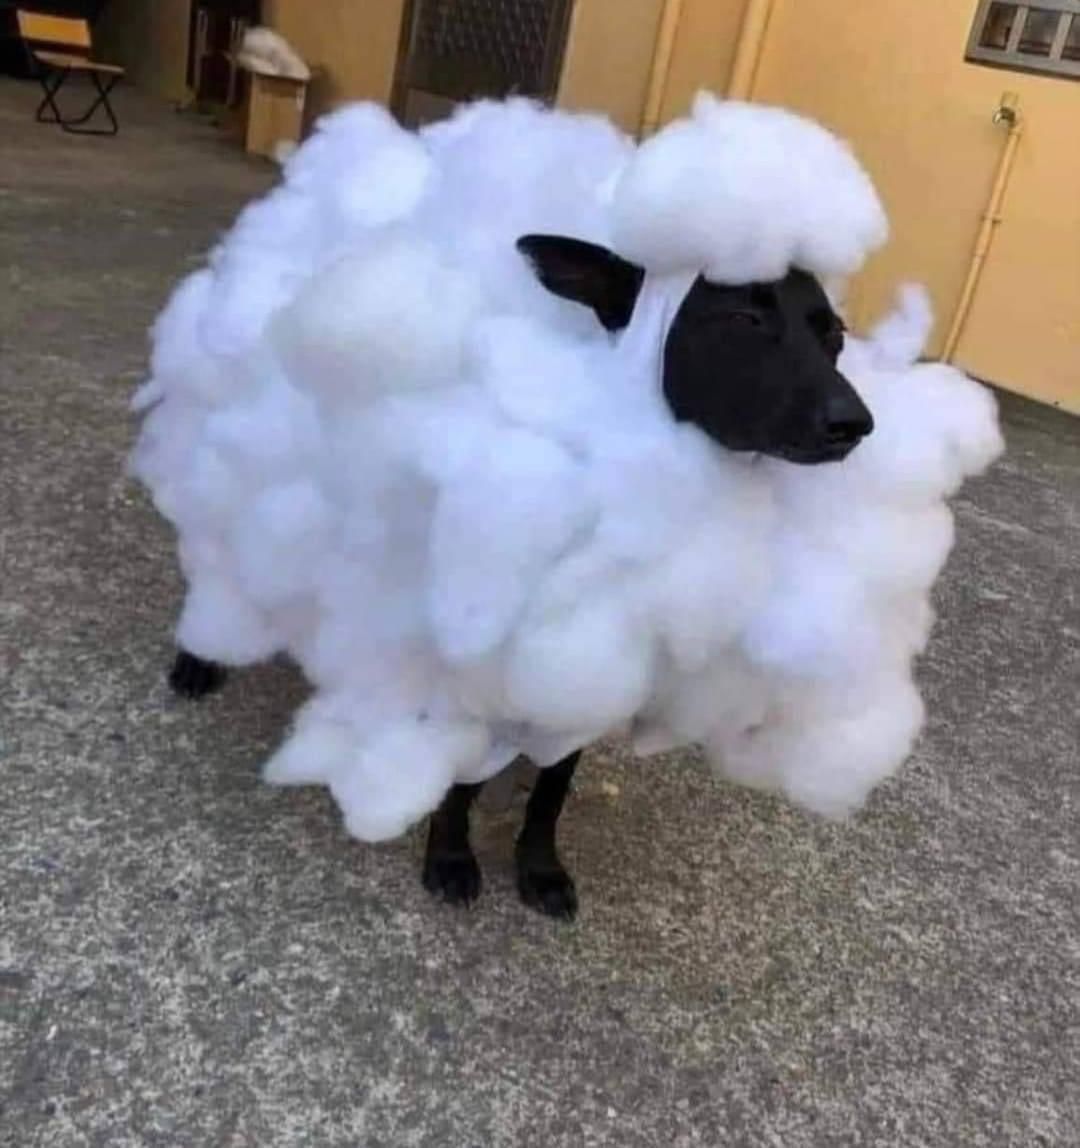 The landlord said no dogs, but they said sheep are okay, so….